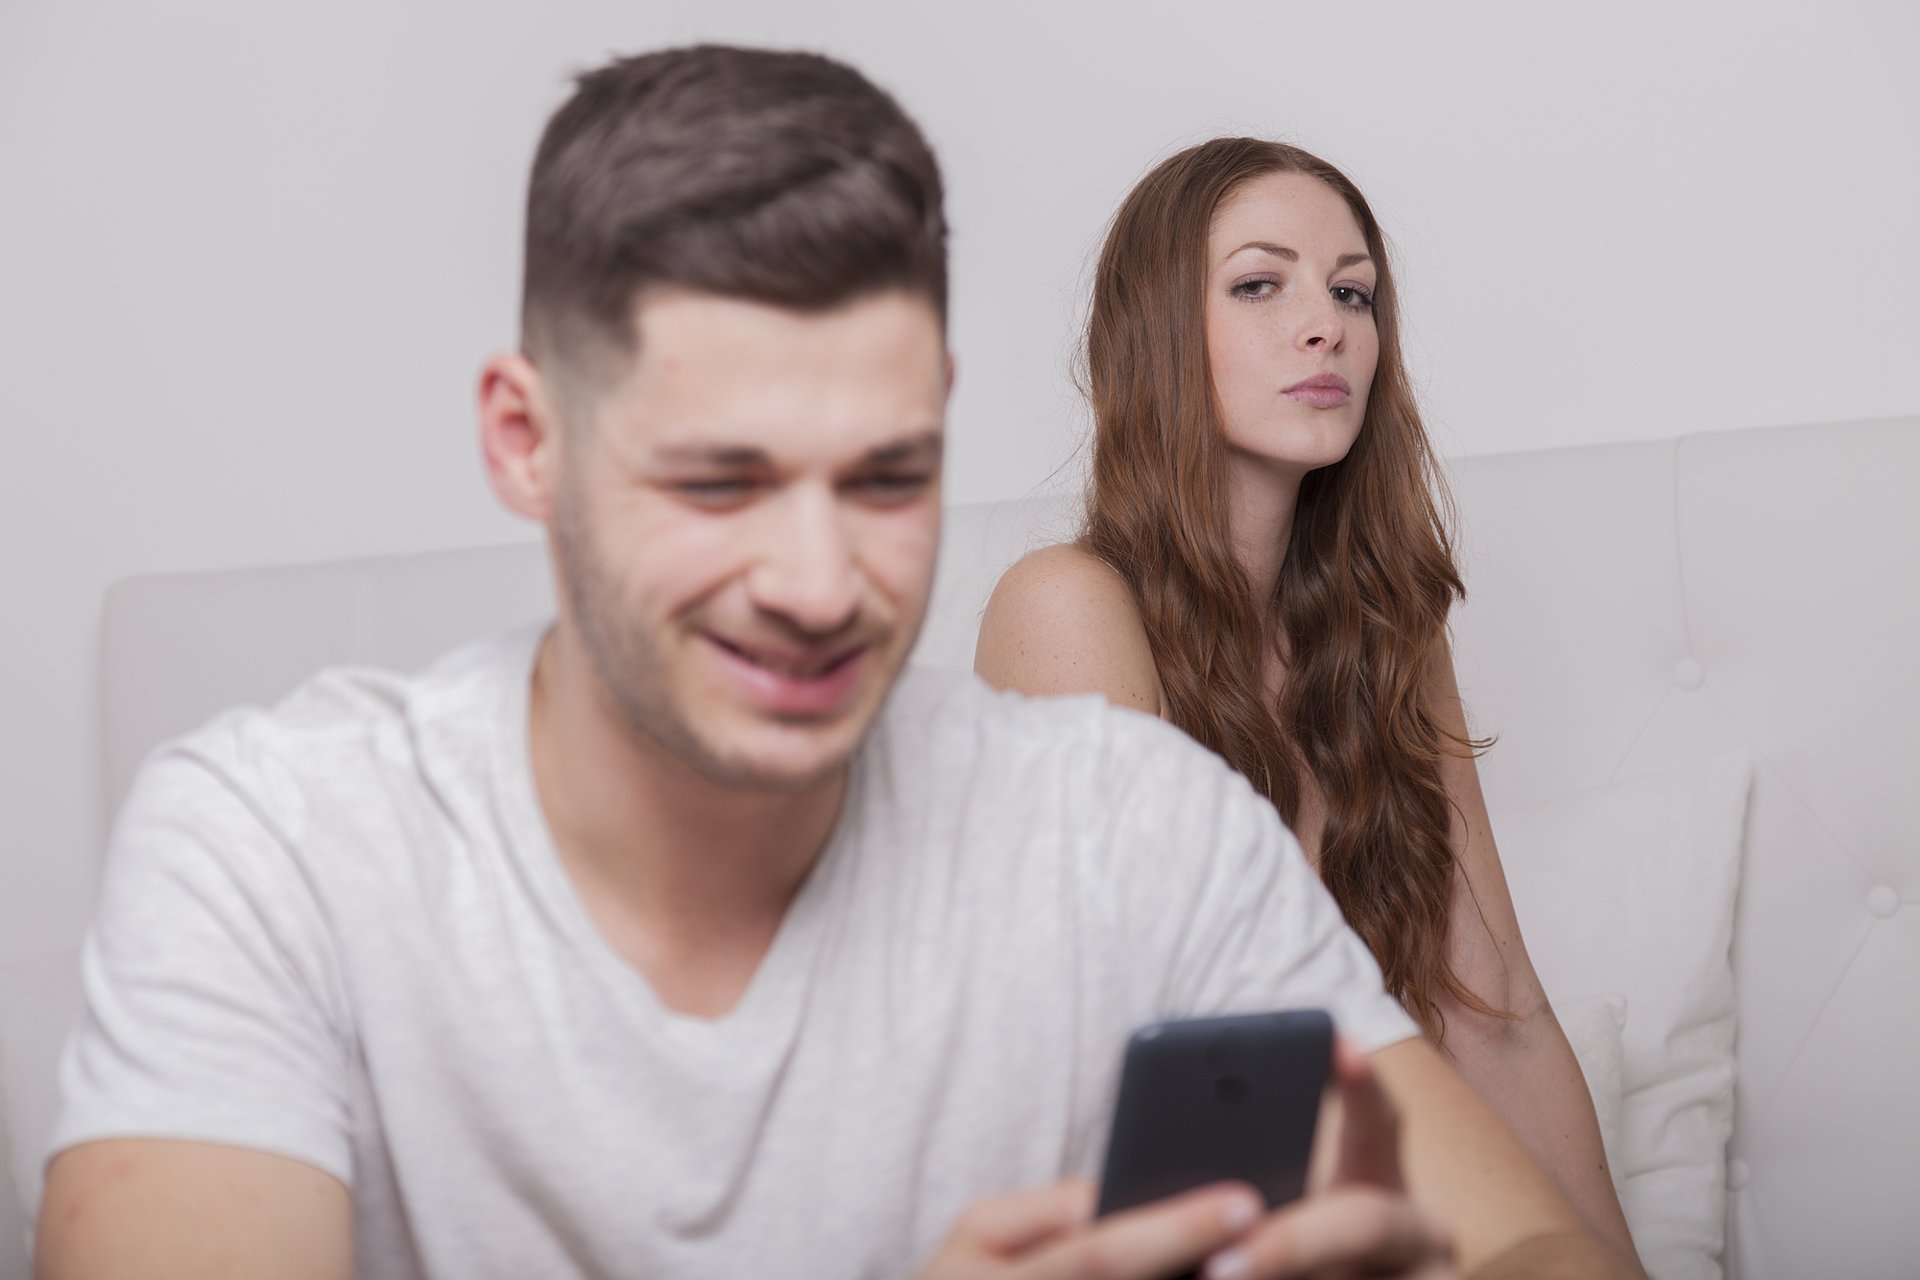 bob floor add is phone sex cheating photo